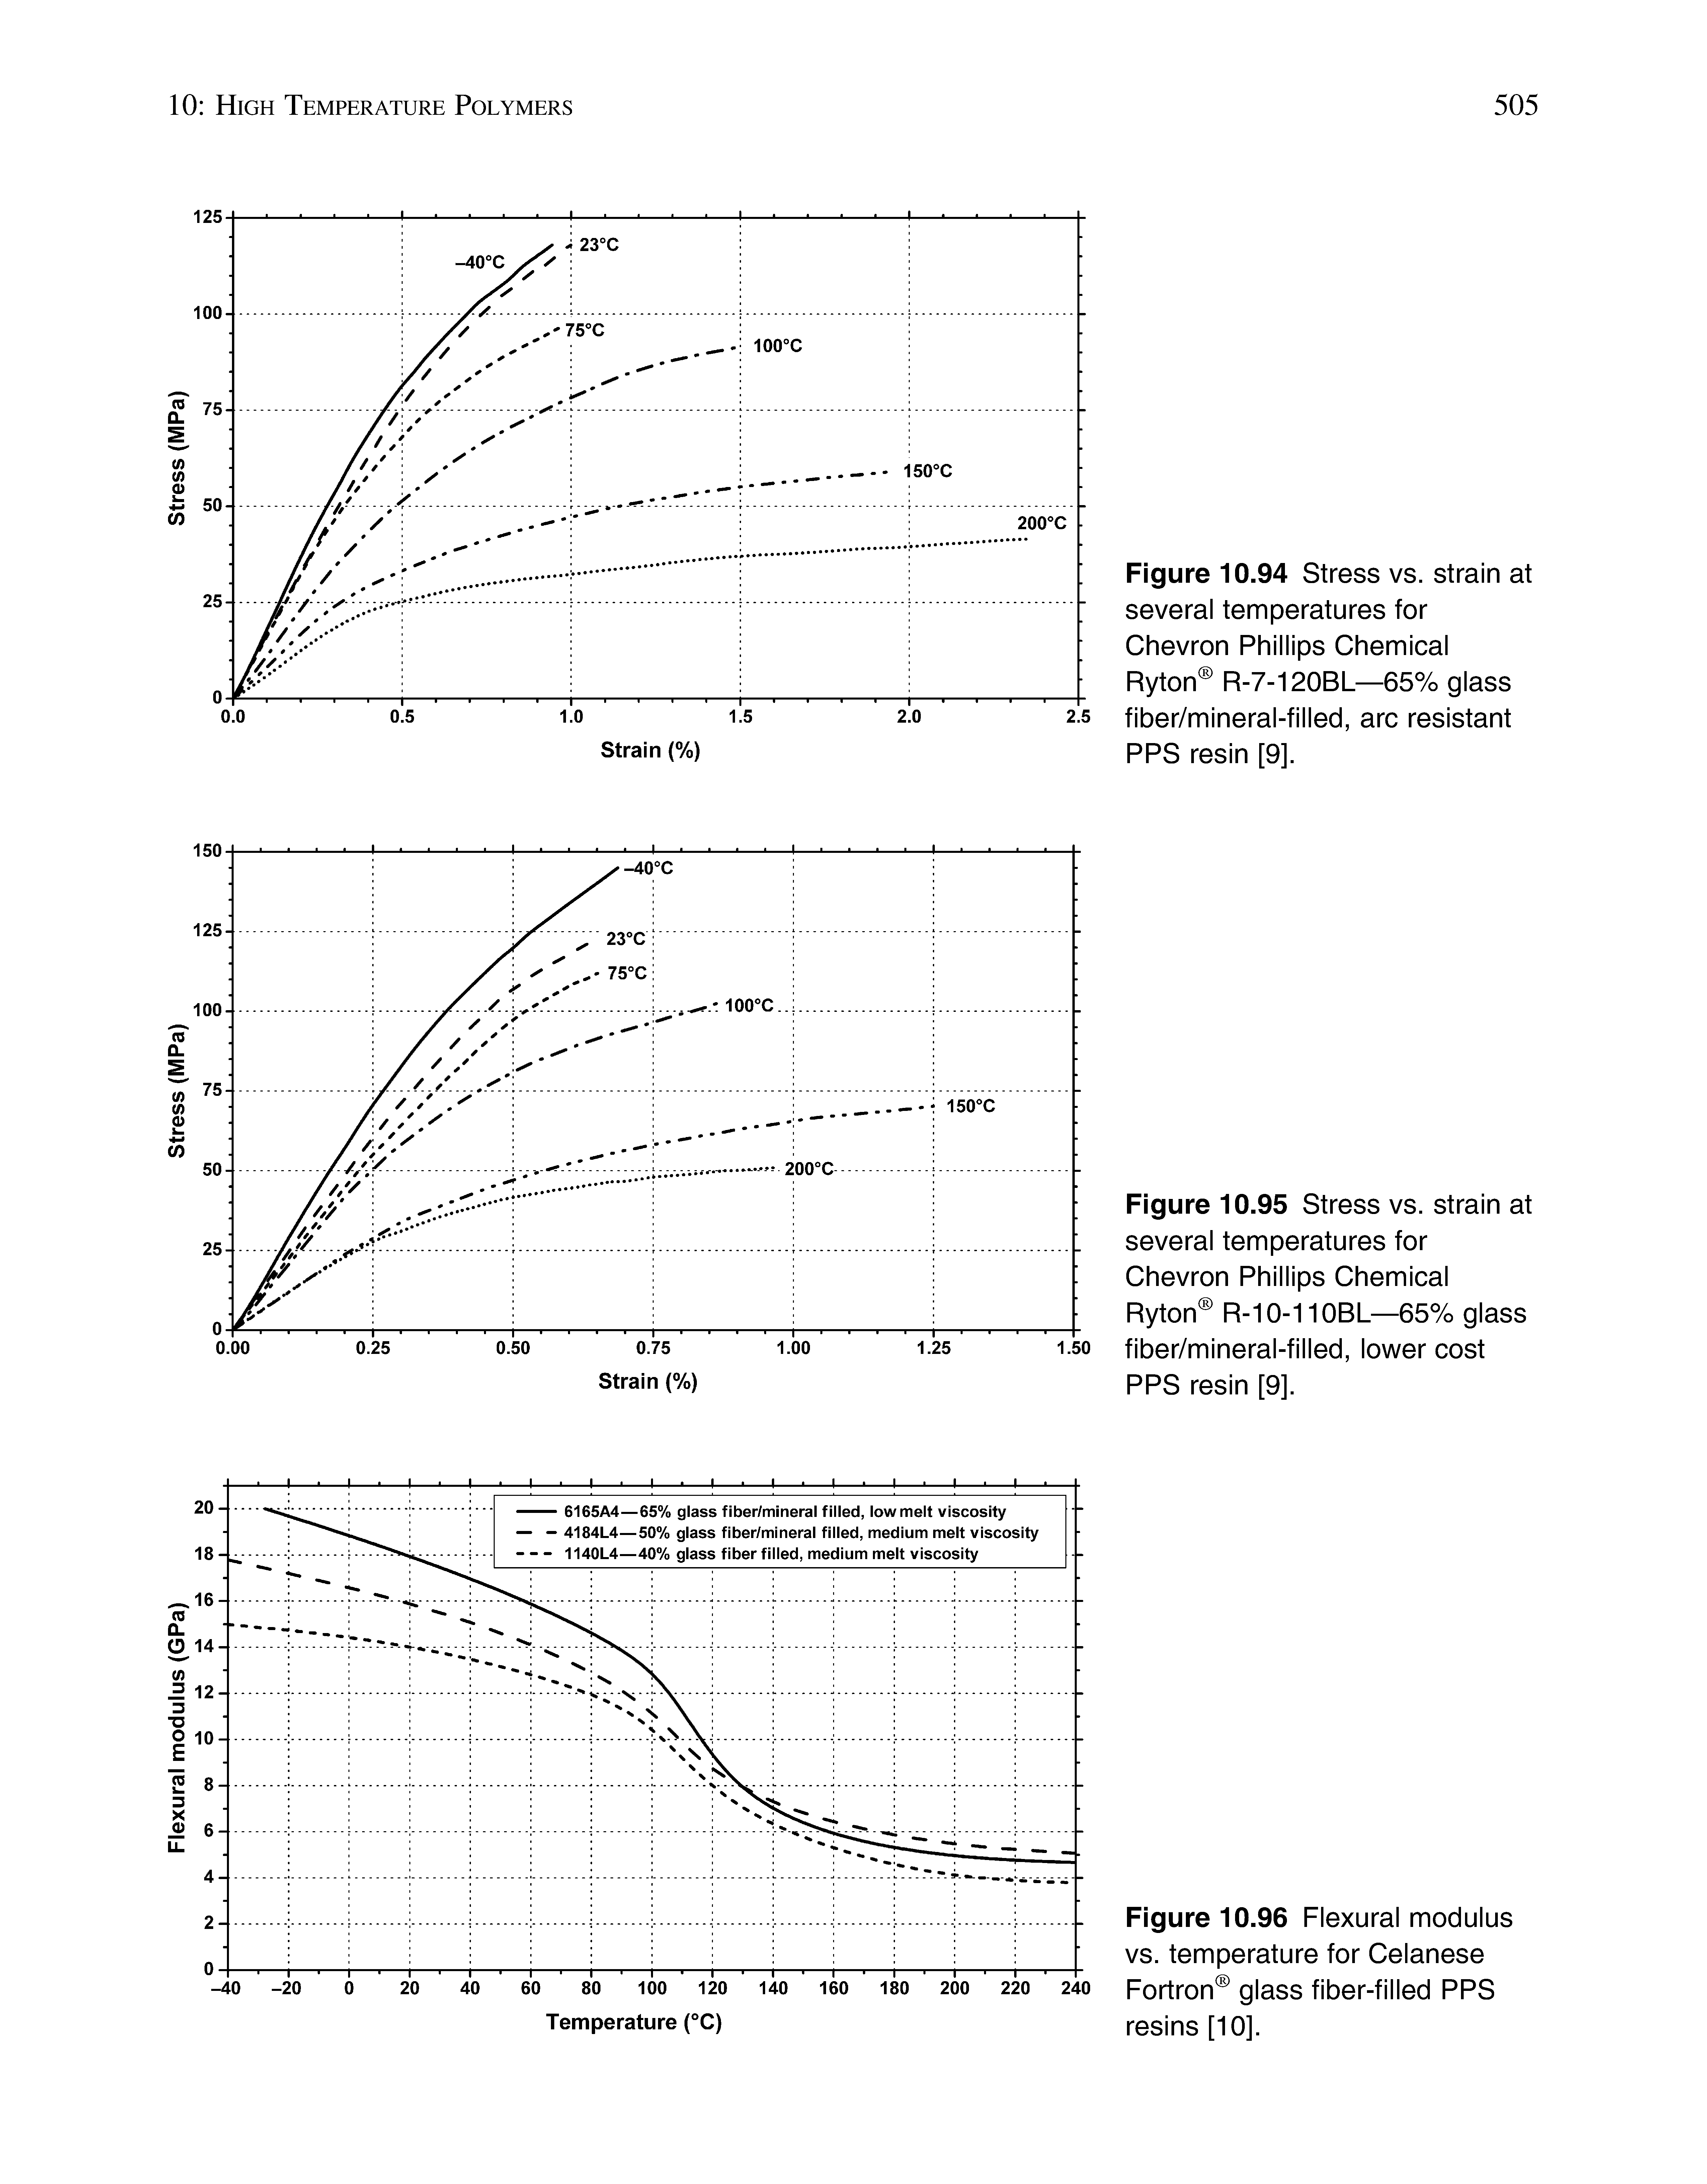 Figure 10.96 Flexural modulus vs. temperature for Celanese Fortron glass fiber-filled PPS resins [10].